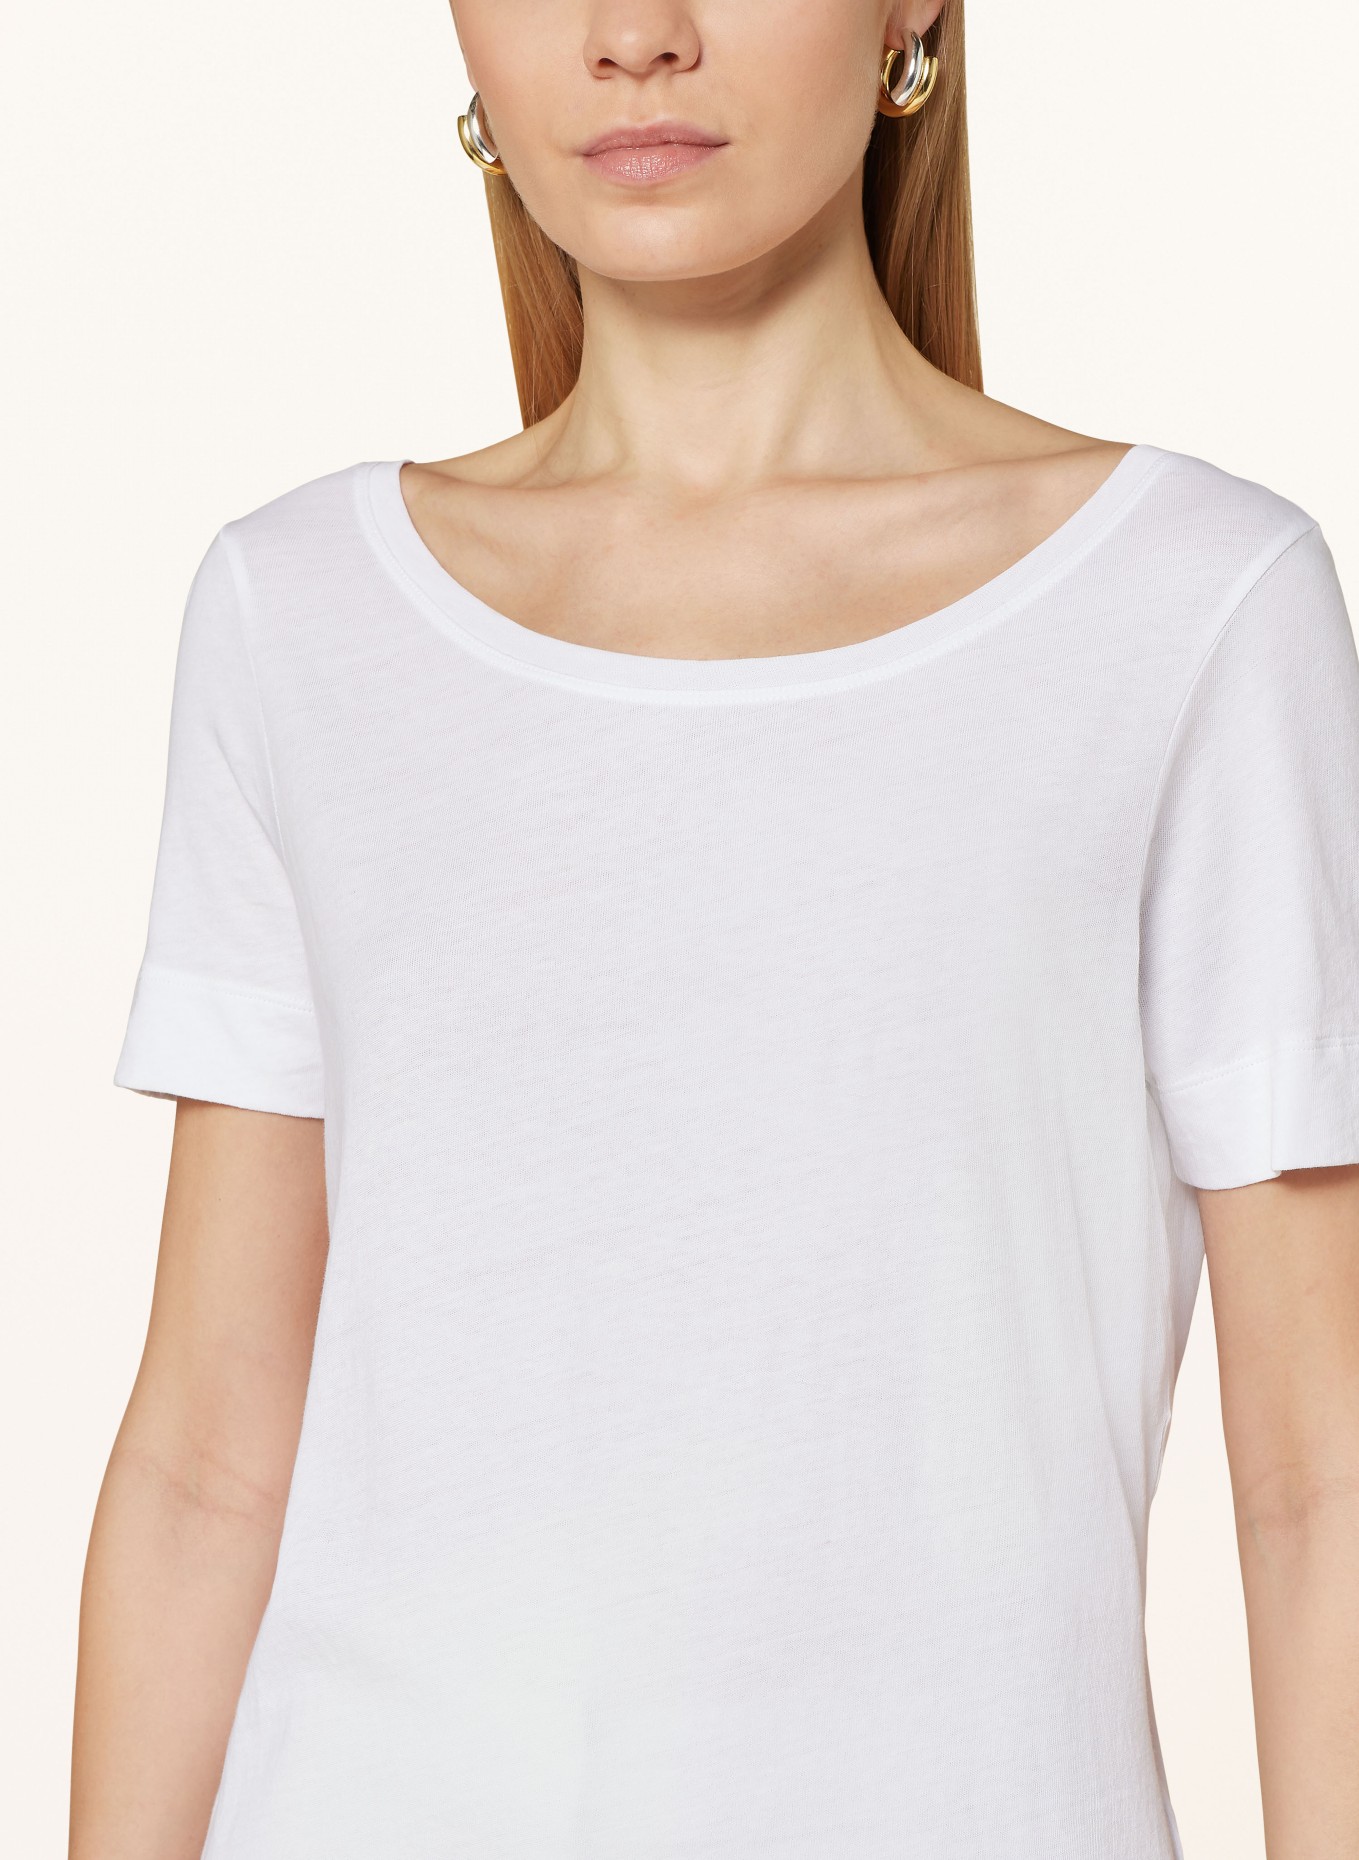 Marc O'Polo T-shirt, Color: WHITE (Image 4)